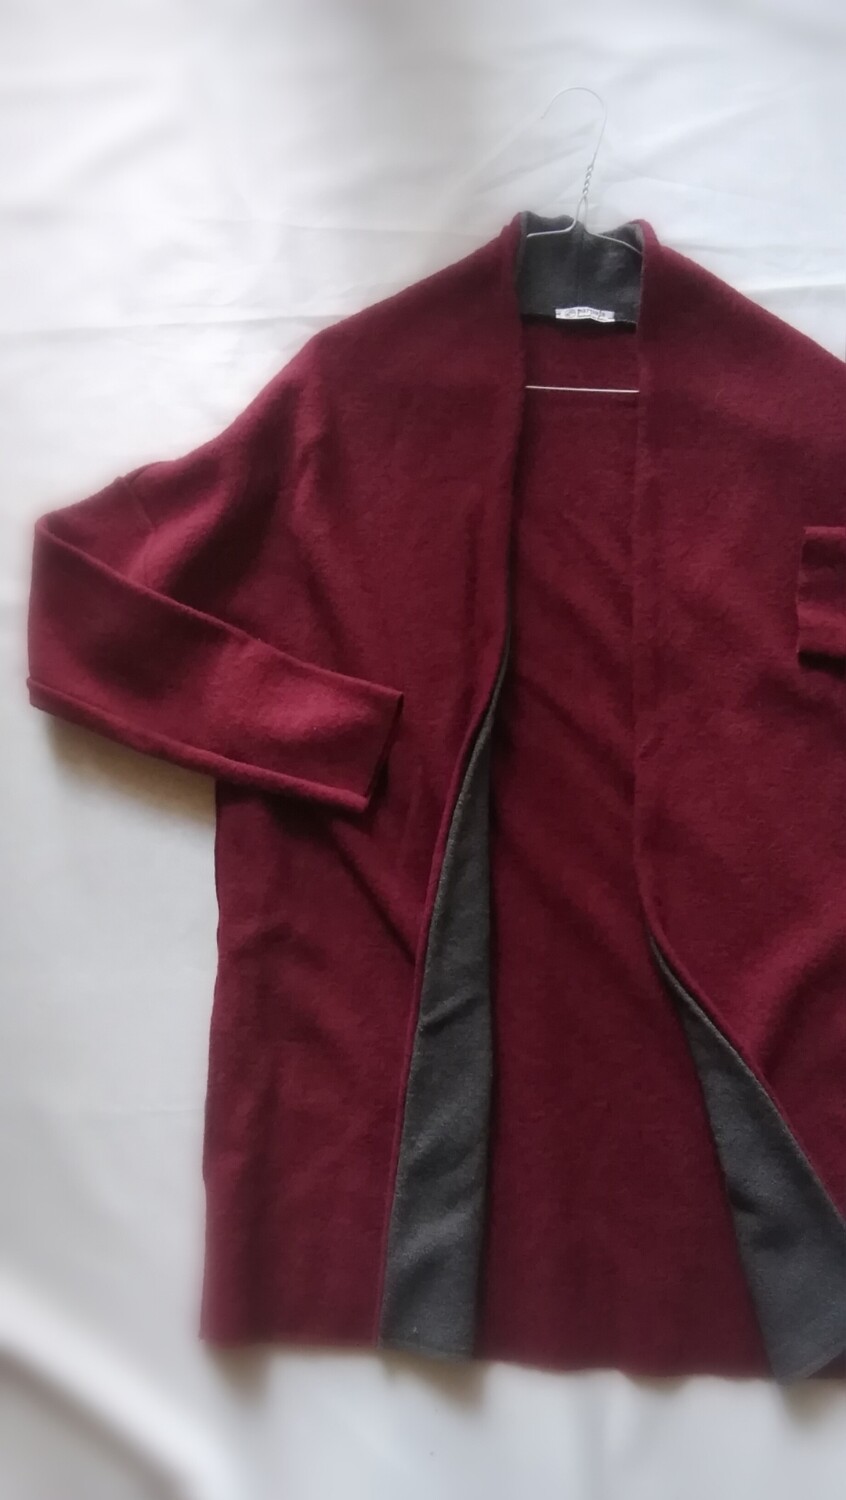 ACERO cardigan / cappottino leggero in lana cotta bicolor bordeaux/grigio 